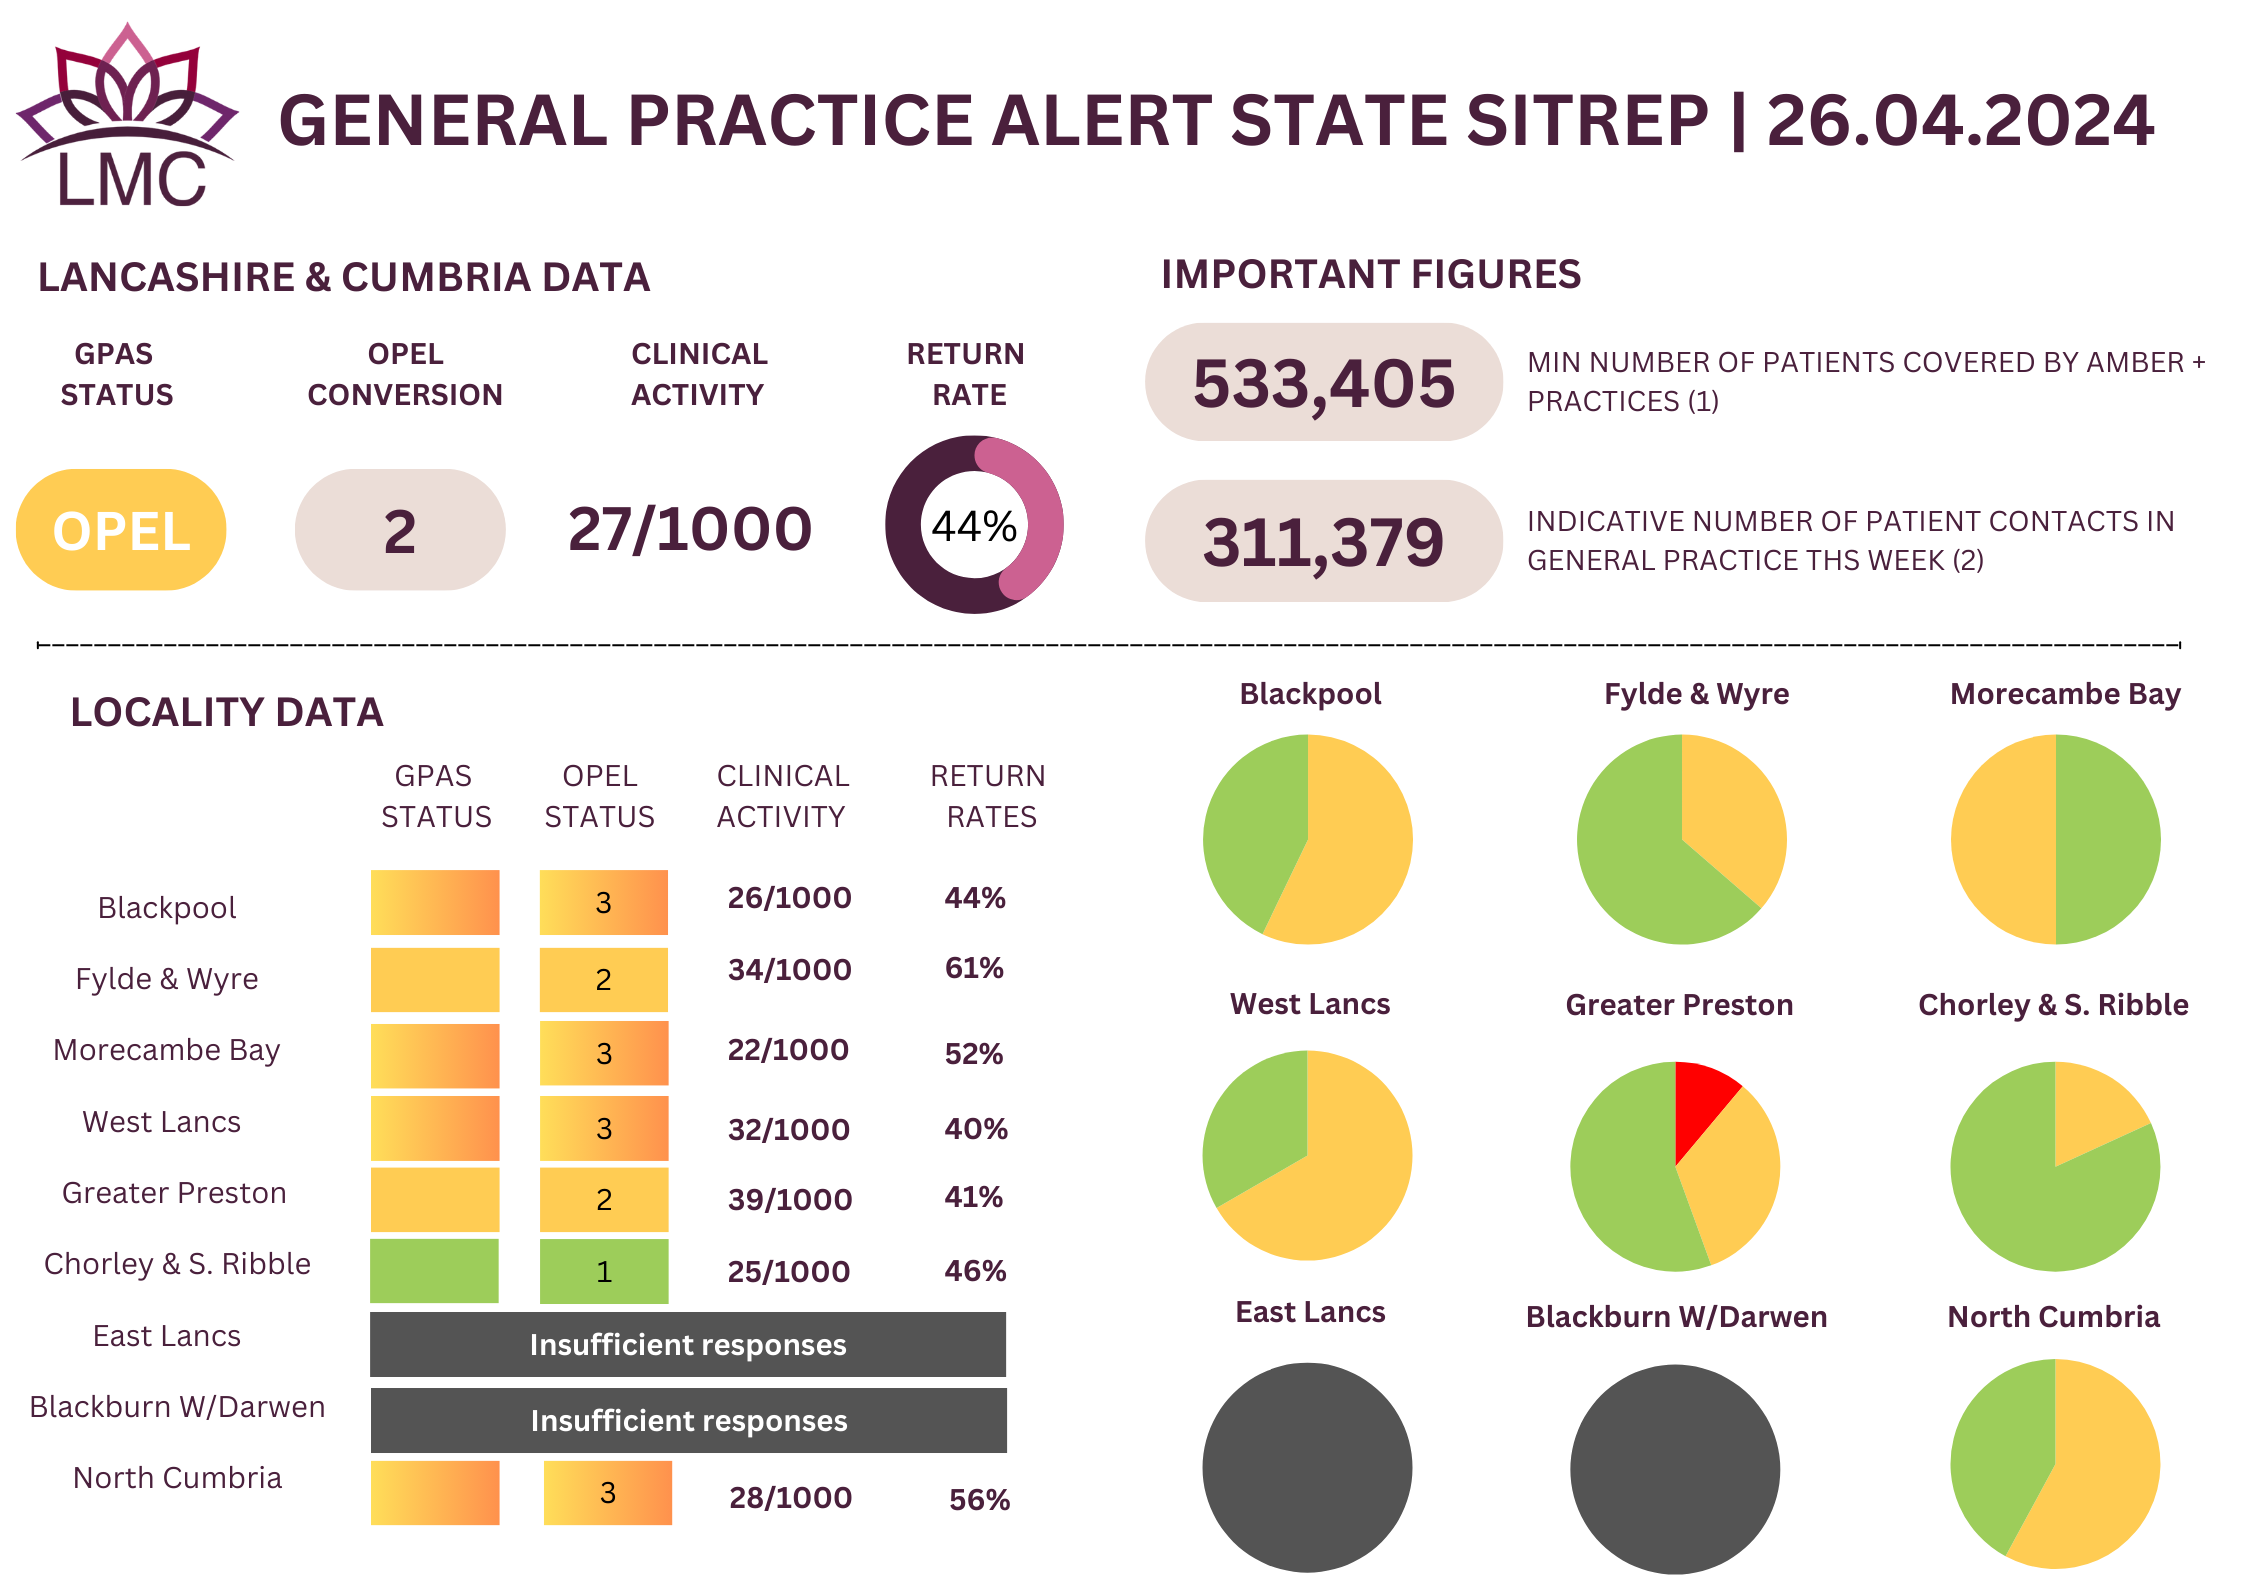 General Practice Alert State (GPAS) SITREP